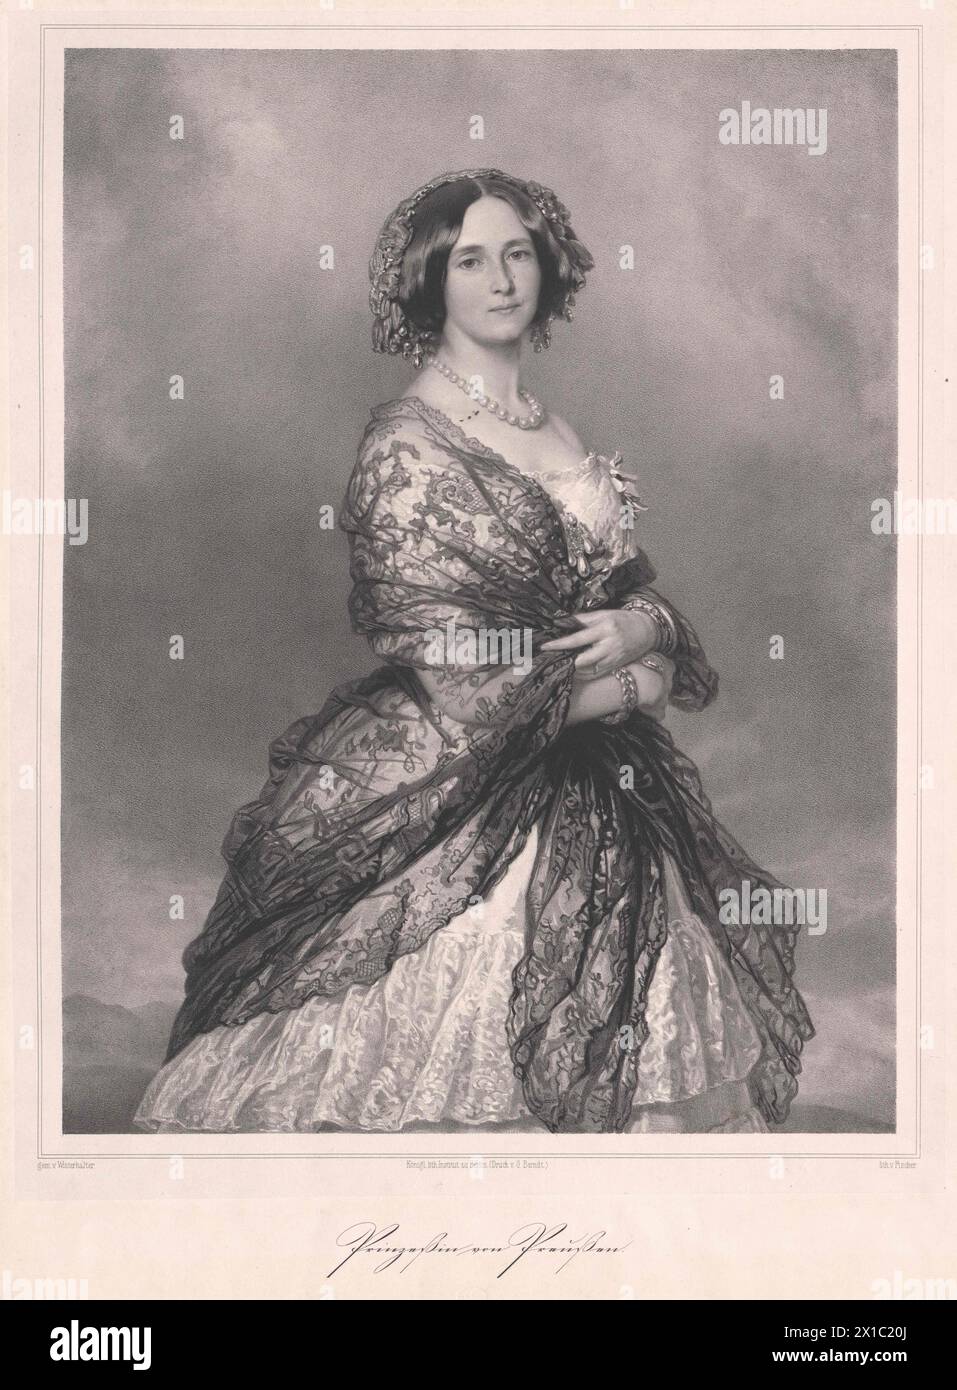 Augusta, principessa di Sassonia-Weimar Eisenach, - 19830422 PD14982 - Rechteinfo: Rights Managed (RM) Foto Stock